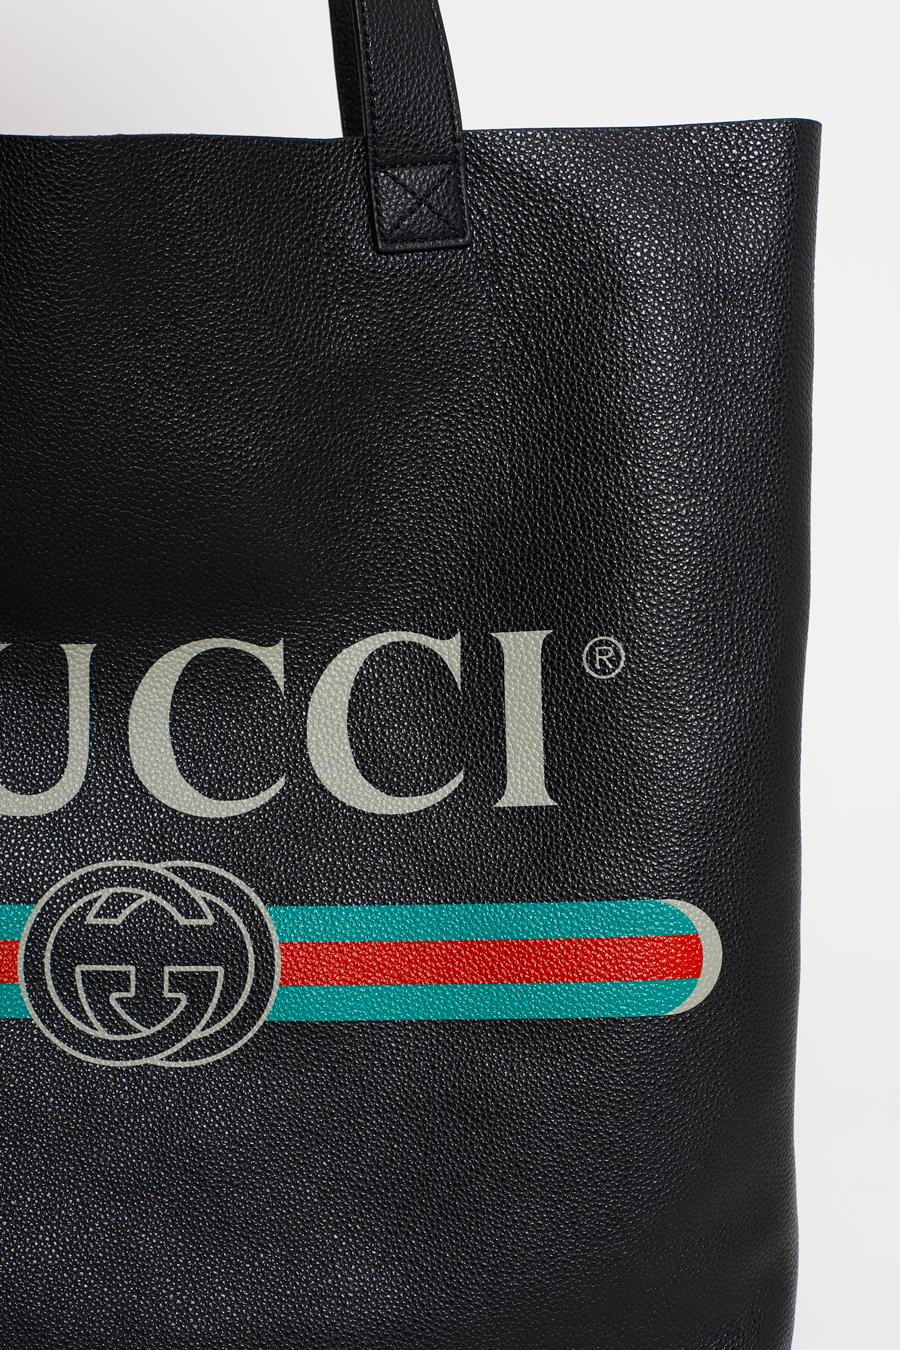 Black Printed Gucci Tote Bag Dobul Gg Logo